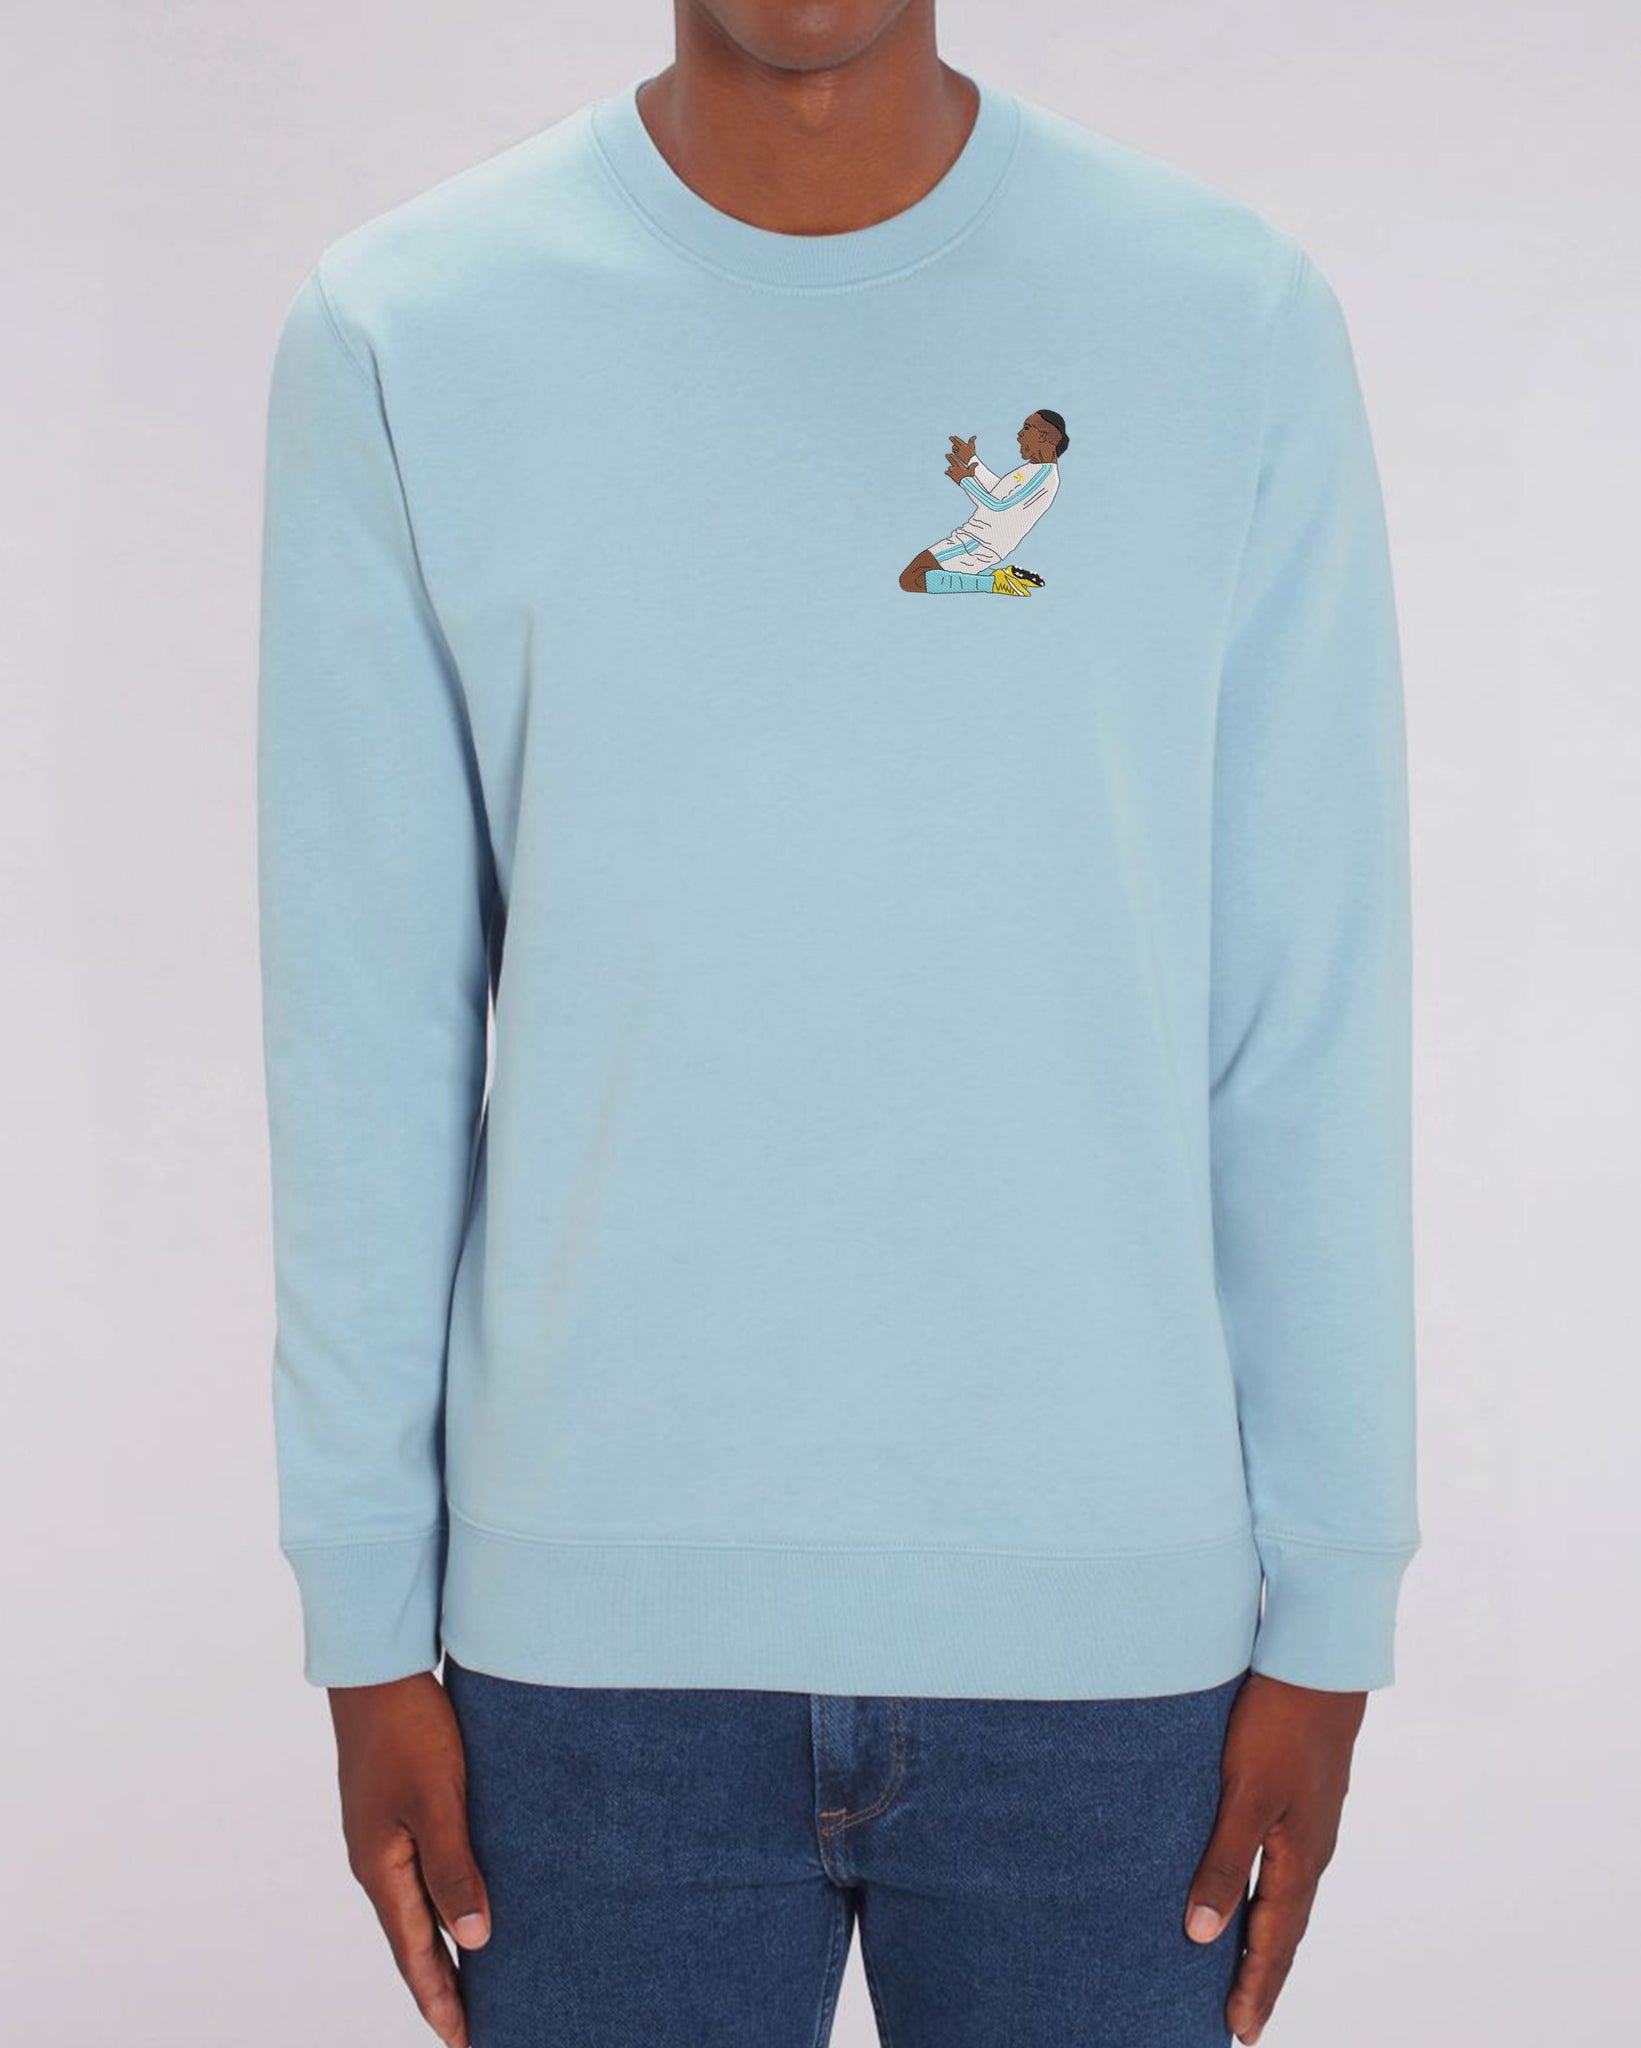 Drogba Marseille embroidered sweatshirt